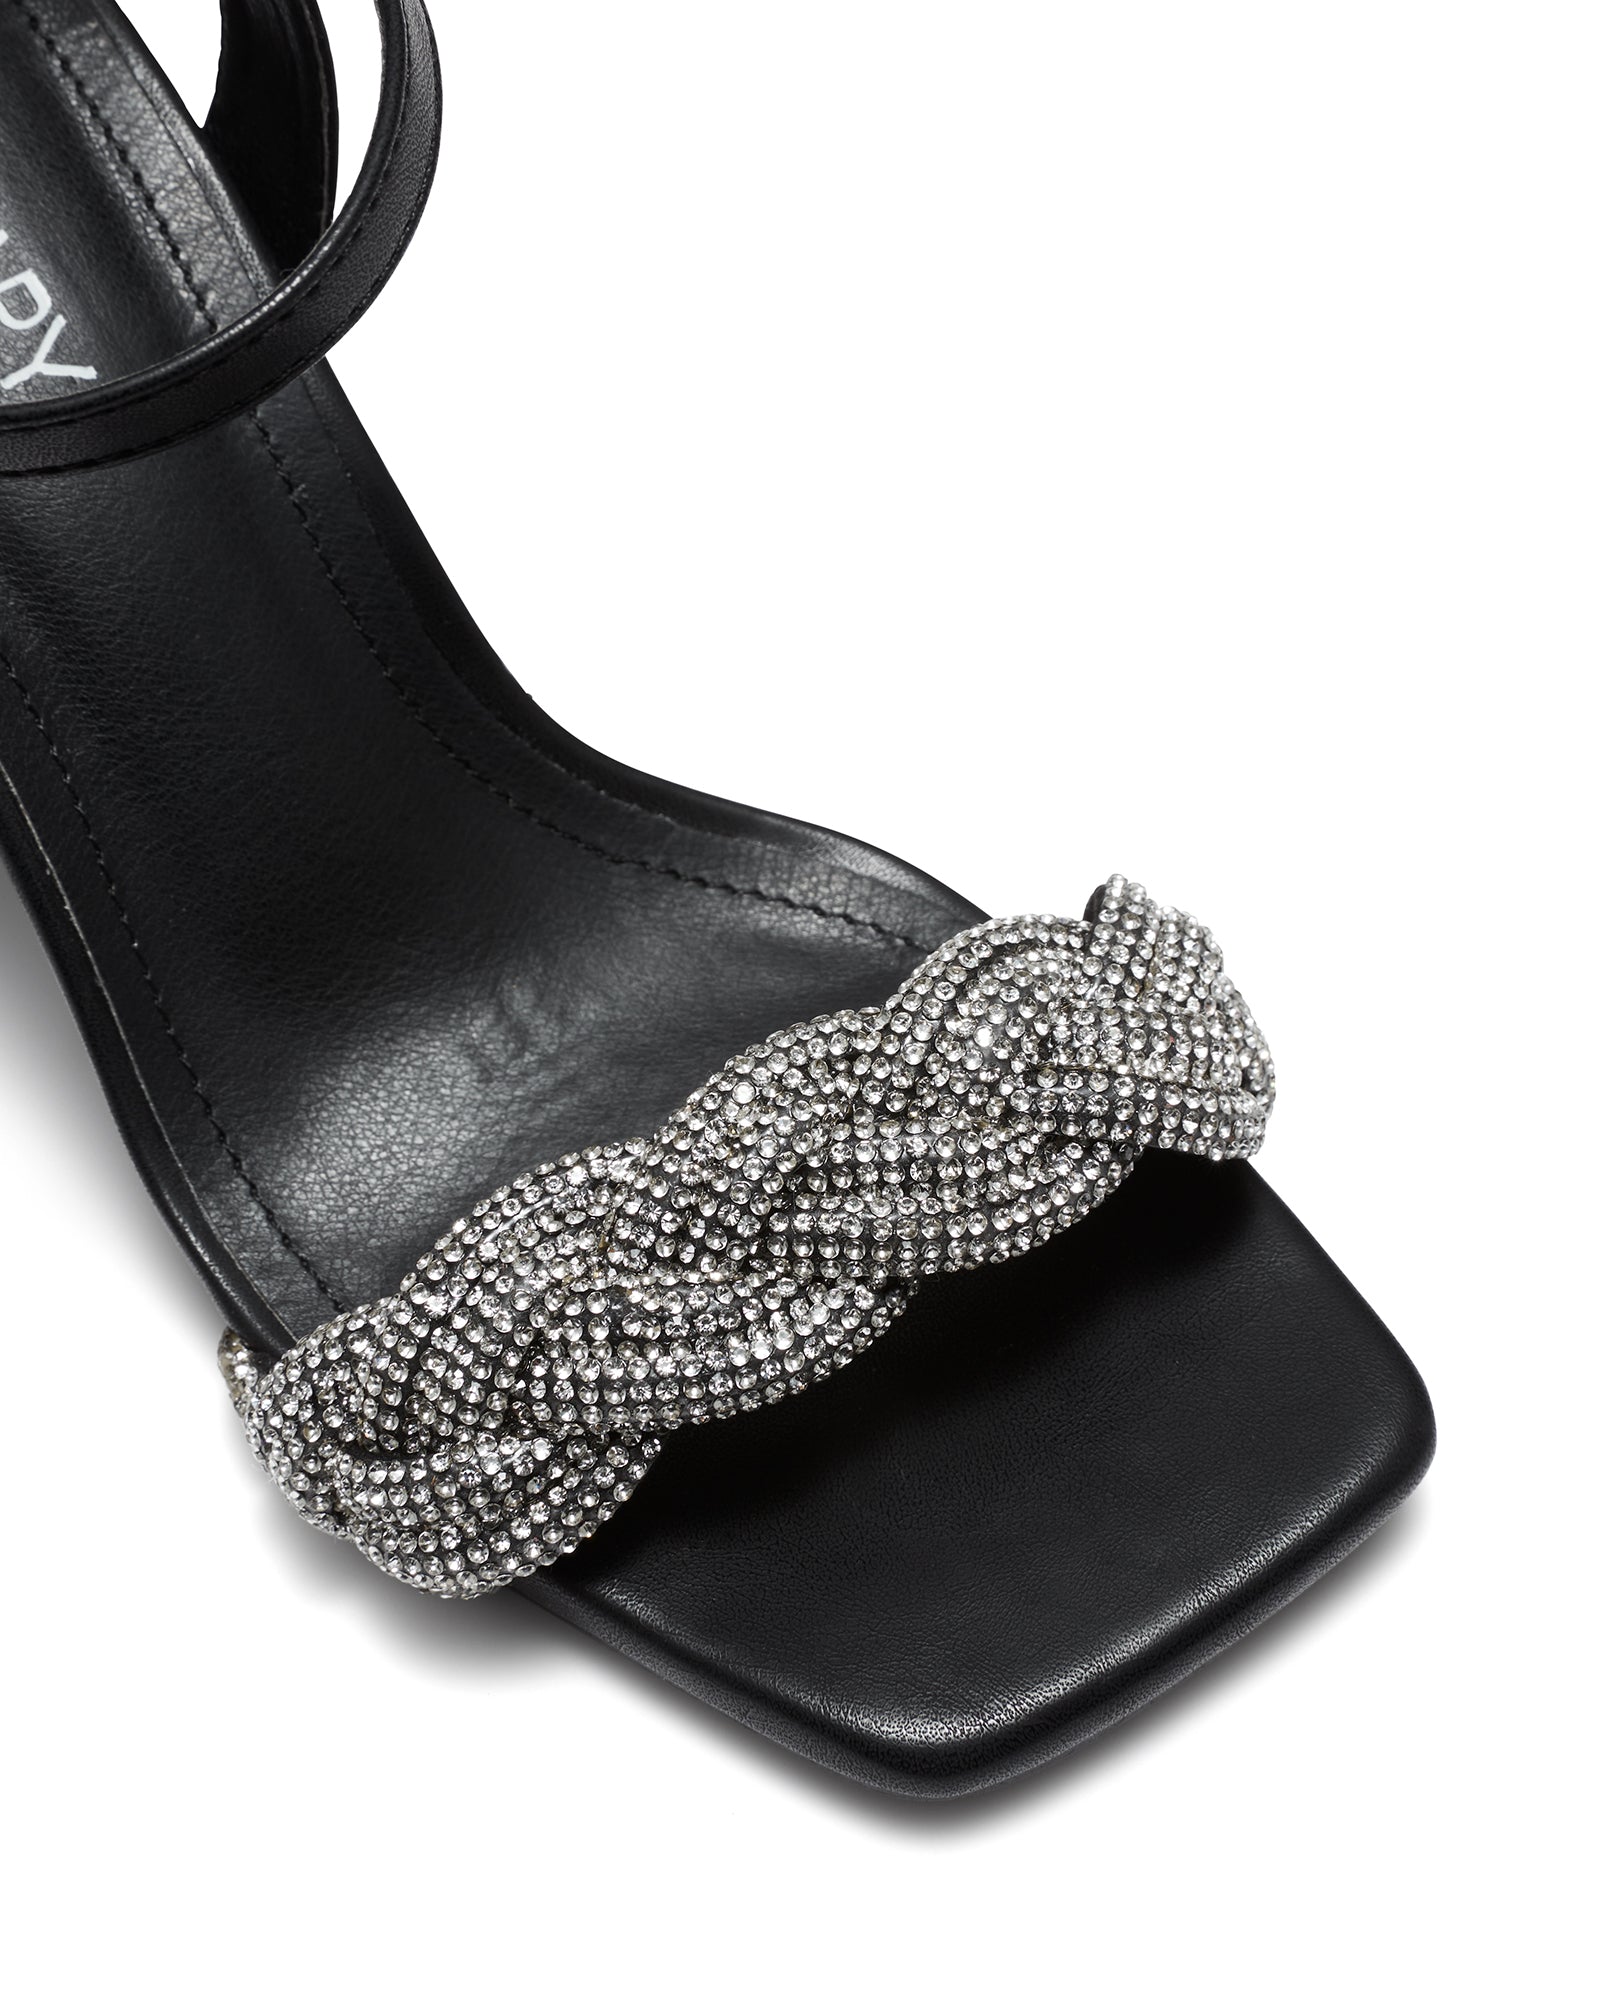 Therapy Shoes Allure Black | Women's Heels | Sandals | Diamante | Braid